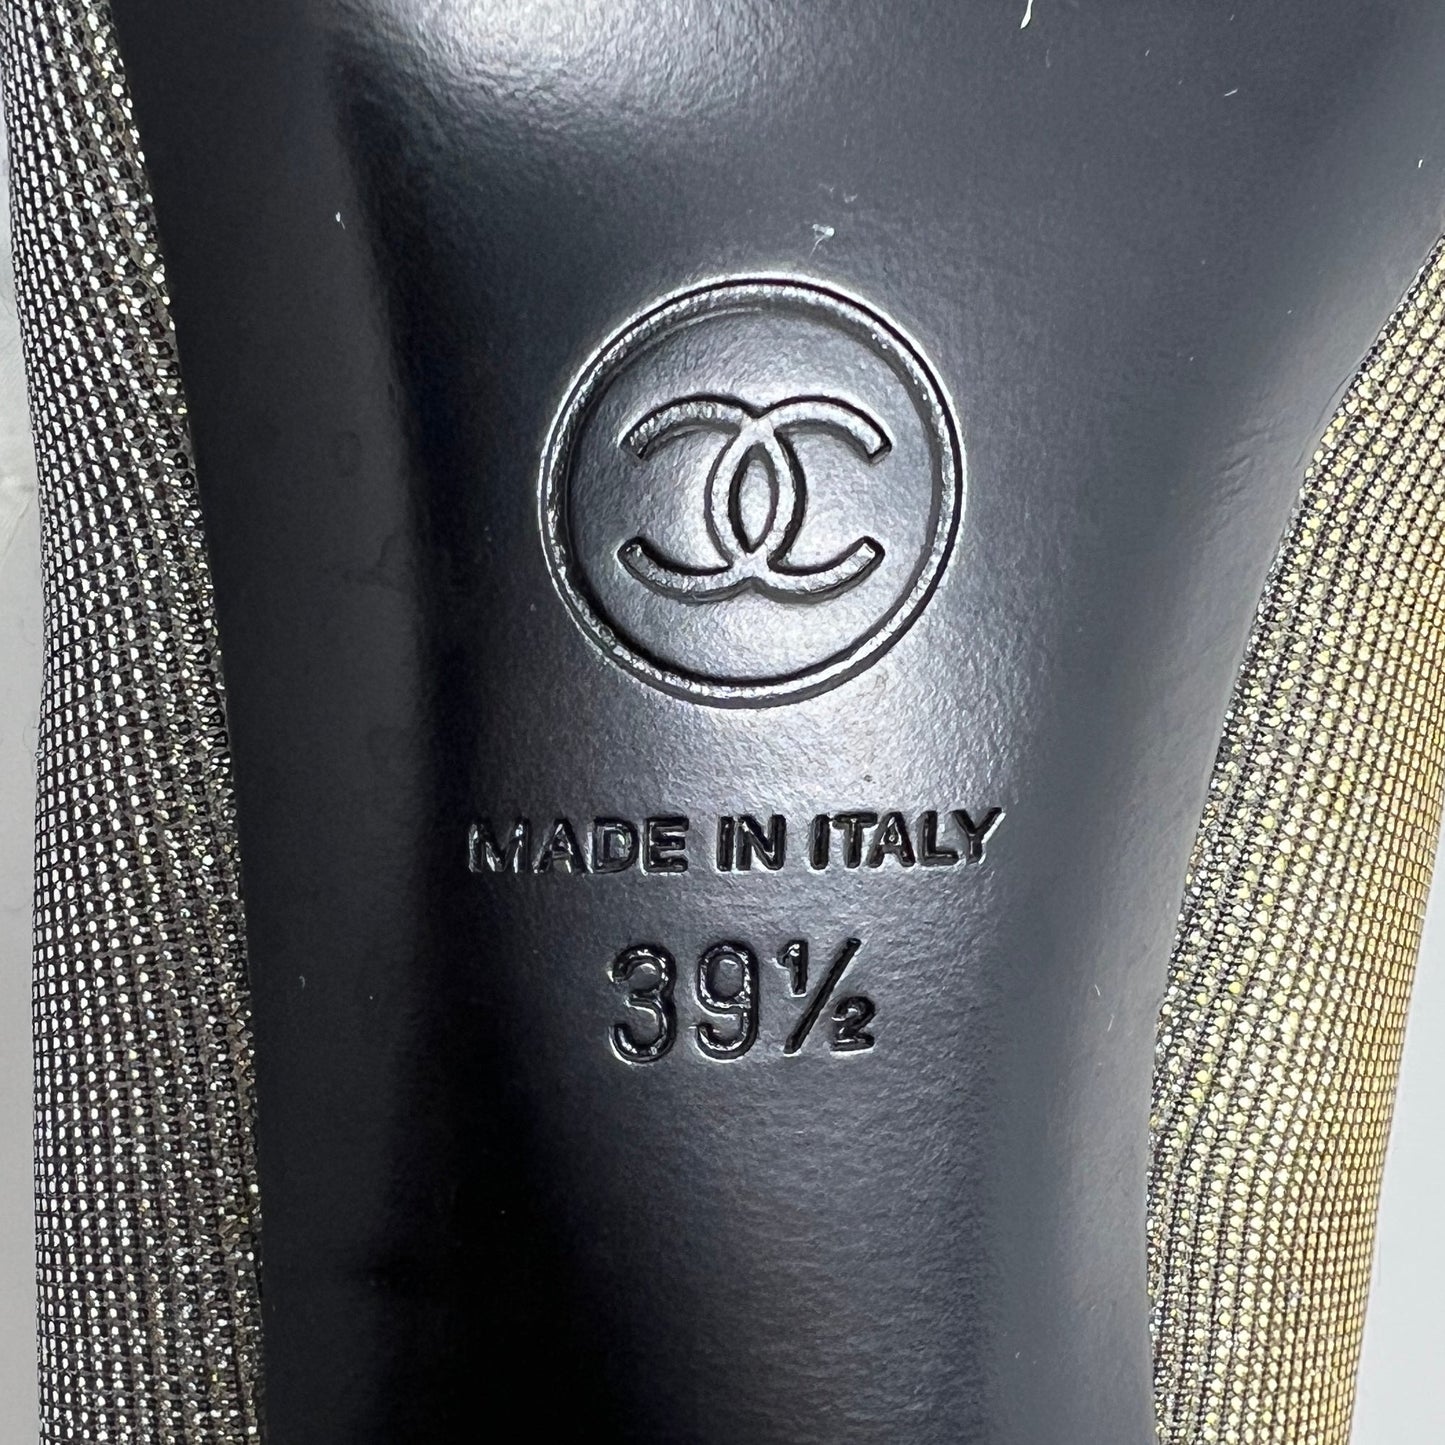 Chanel Grosgrain Cap Toe Metallic Fabric Lurex Pointed toe Logo Heels Pumps Size EU 39.5